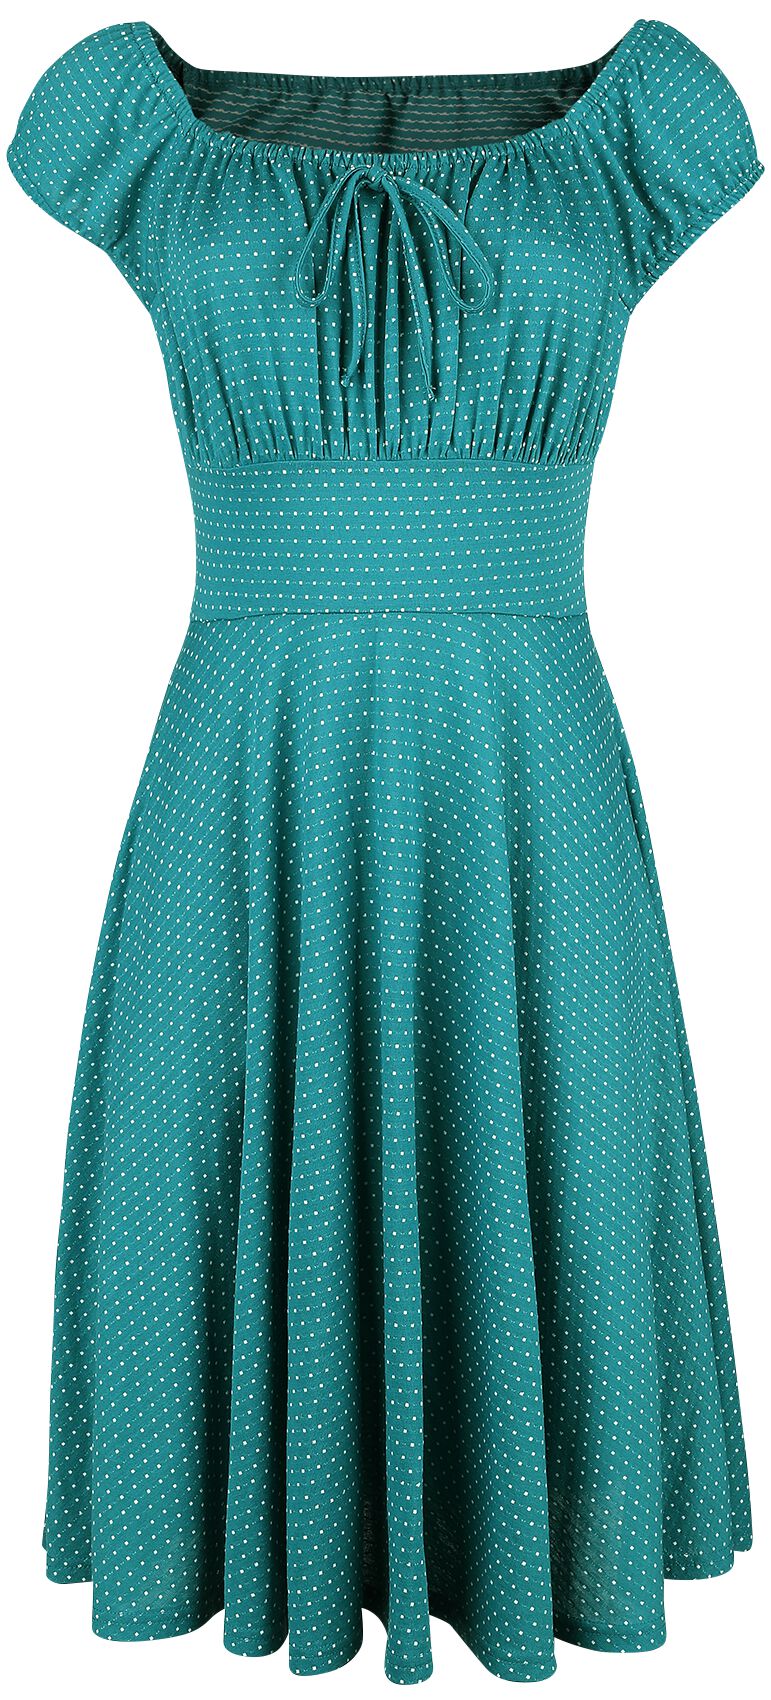 Voodoo Vixen - Rockabilly Kleid knielang - Tessy Green Gathered Dress - XS bis 4XL - für Damen - Größe 3XL - petrol